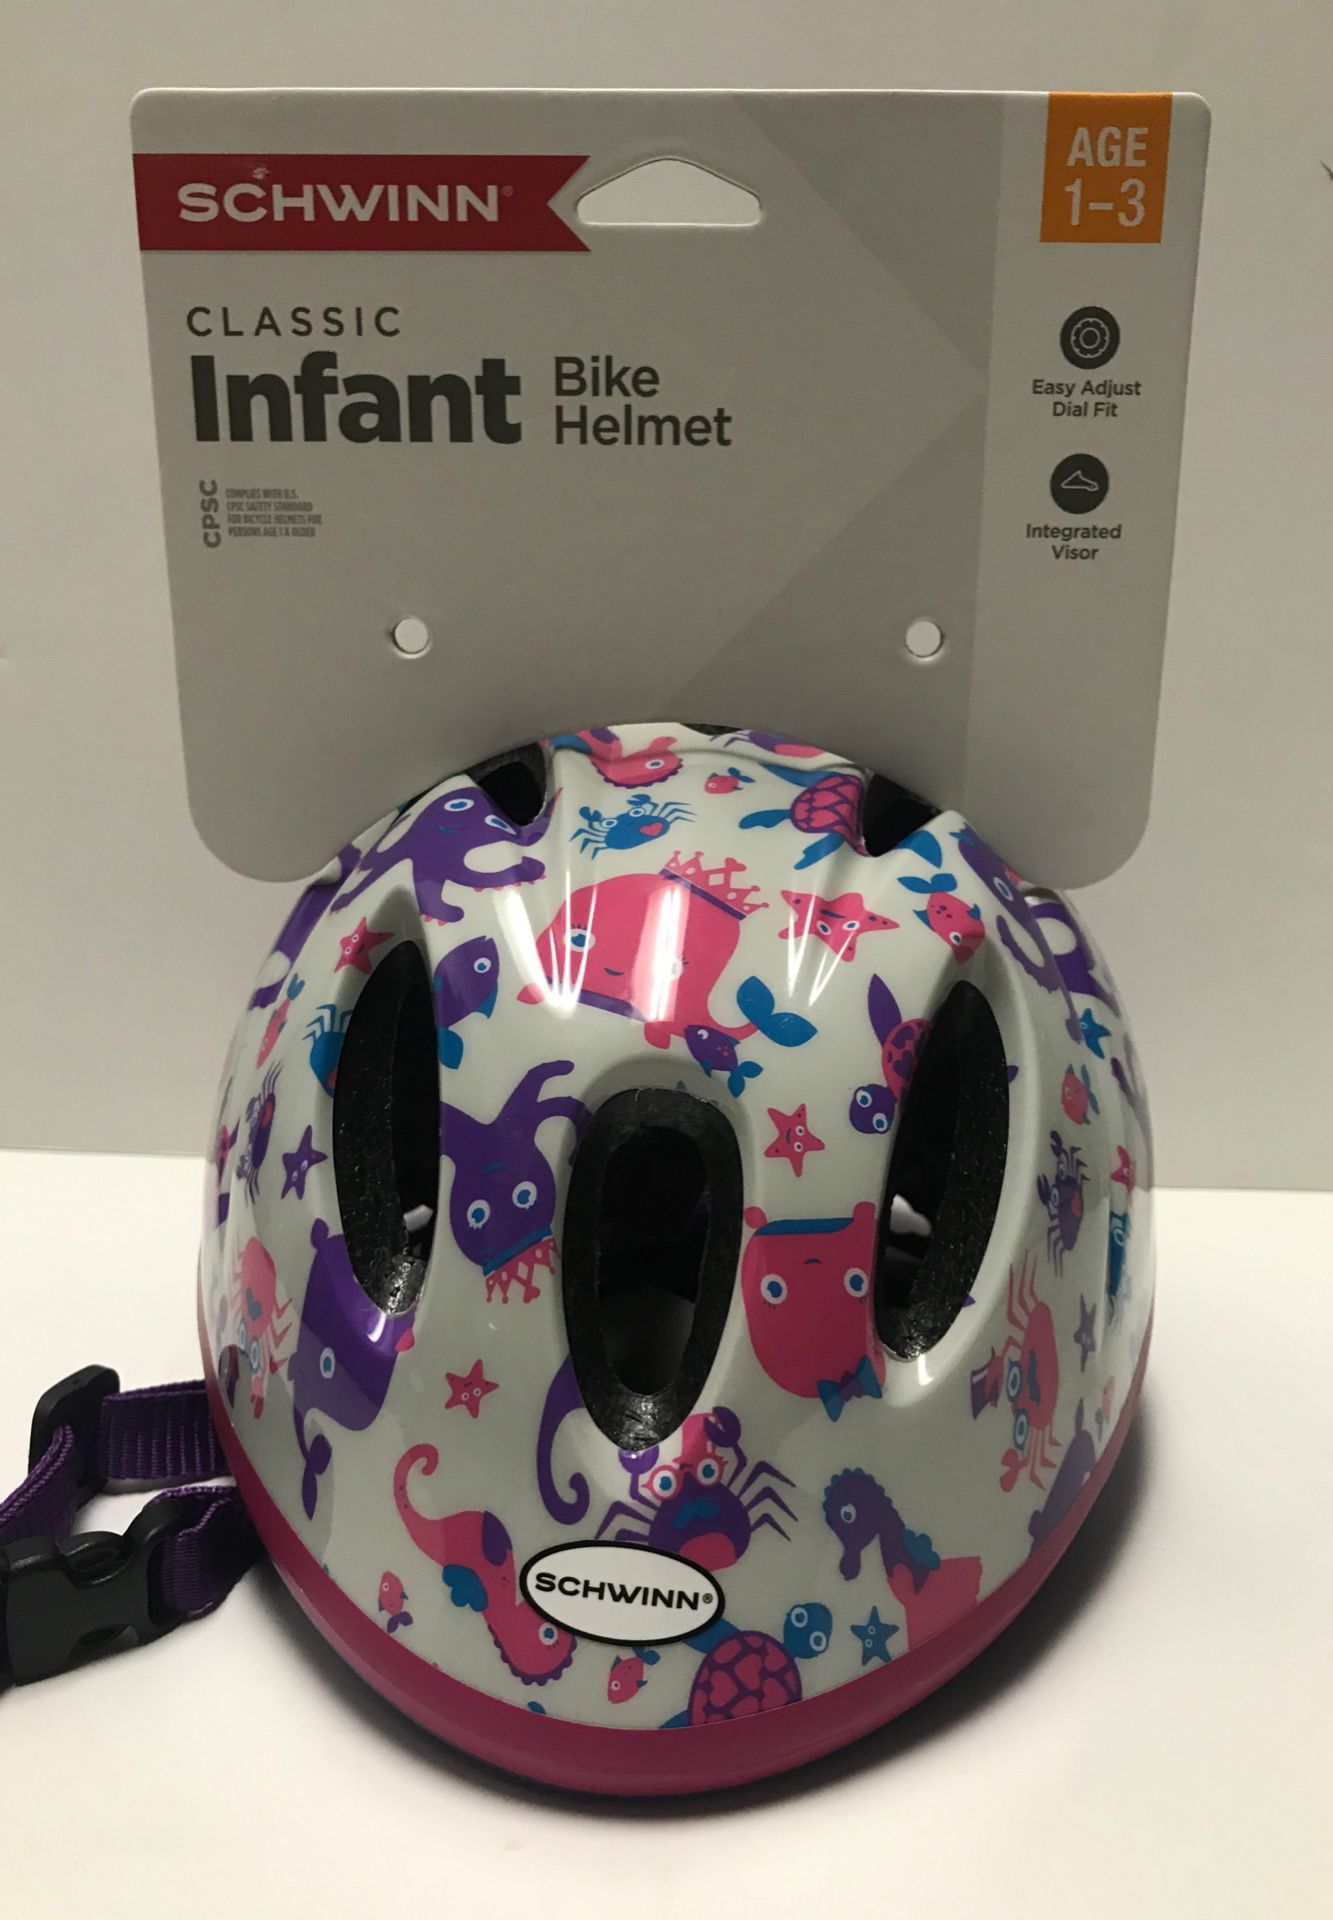 Schwinn Classic Children’s Bike Helmet | Ages 1-3 | Brand new with tags